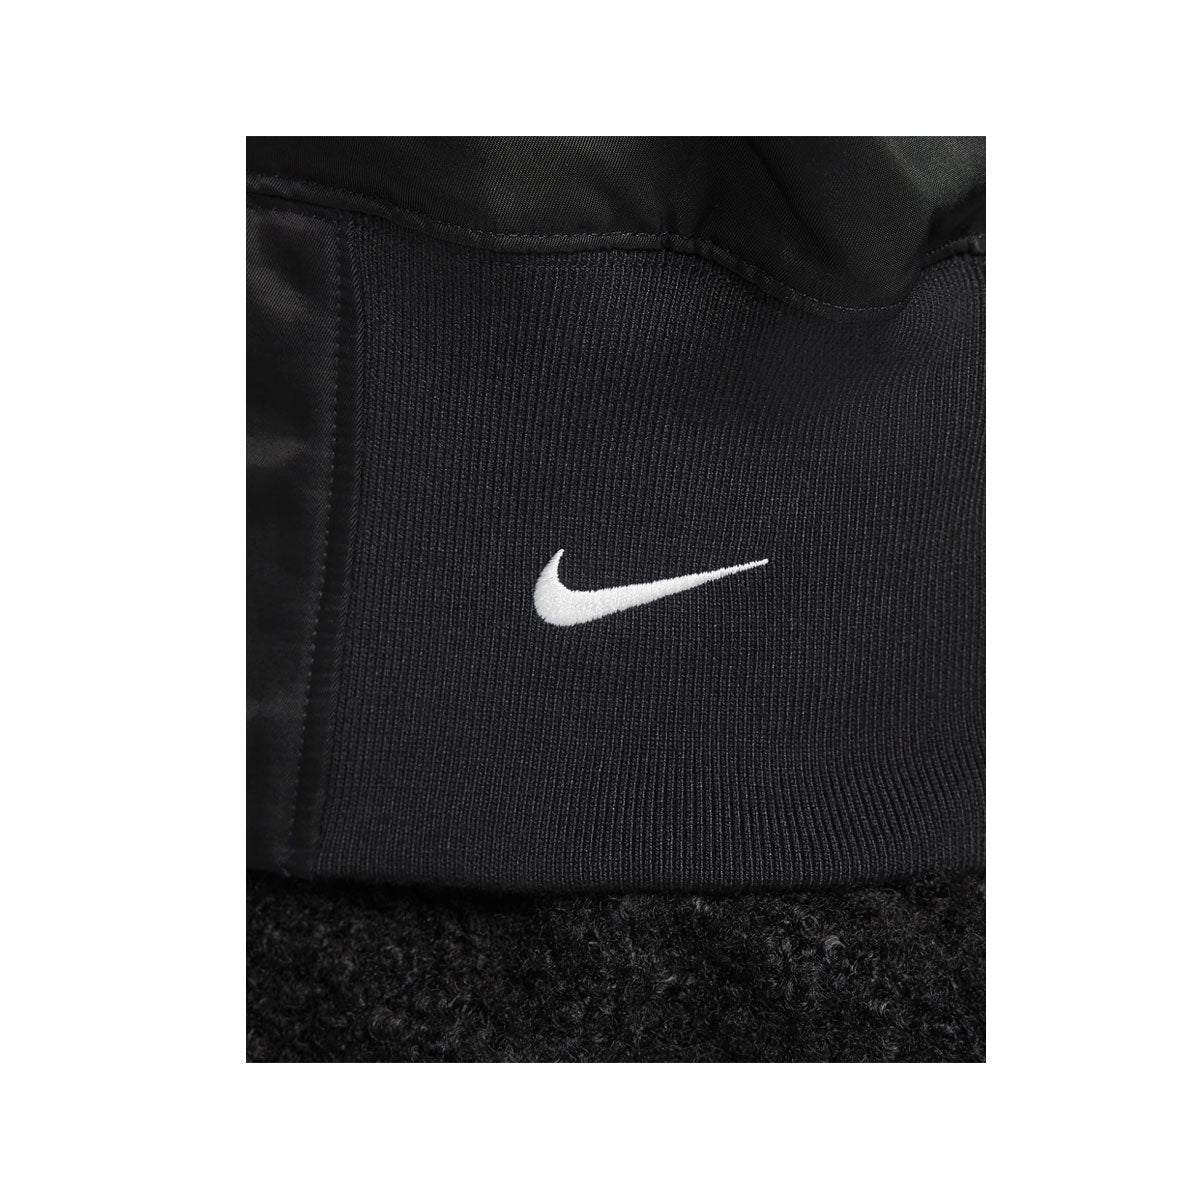 Nike Sportswear Collection Women's High-Pile Fleece Bomber Jacket